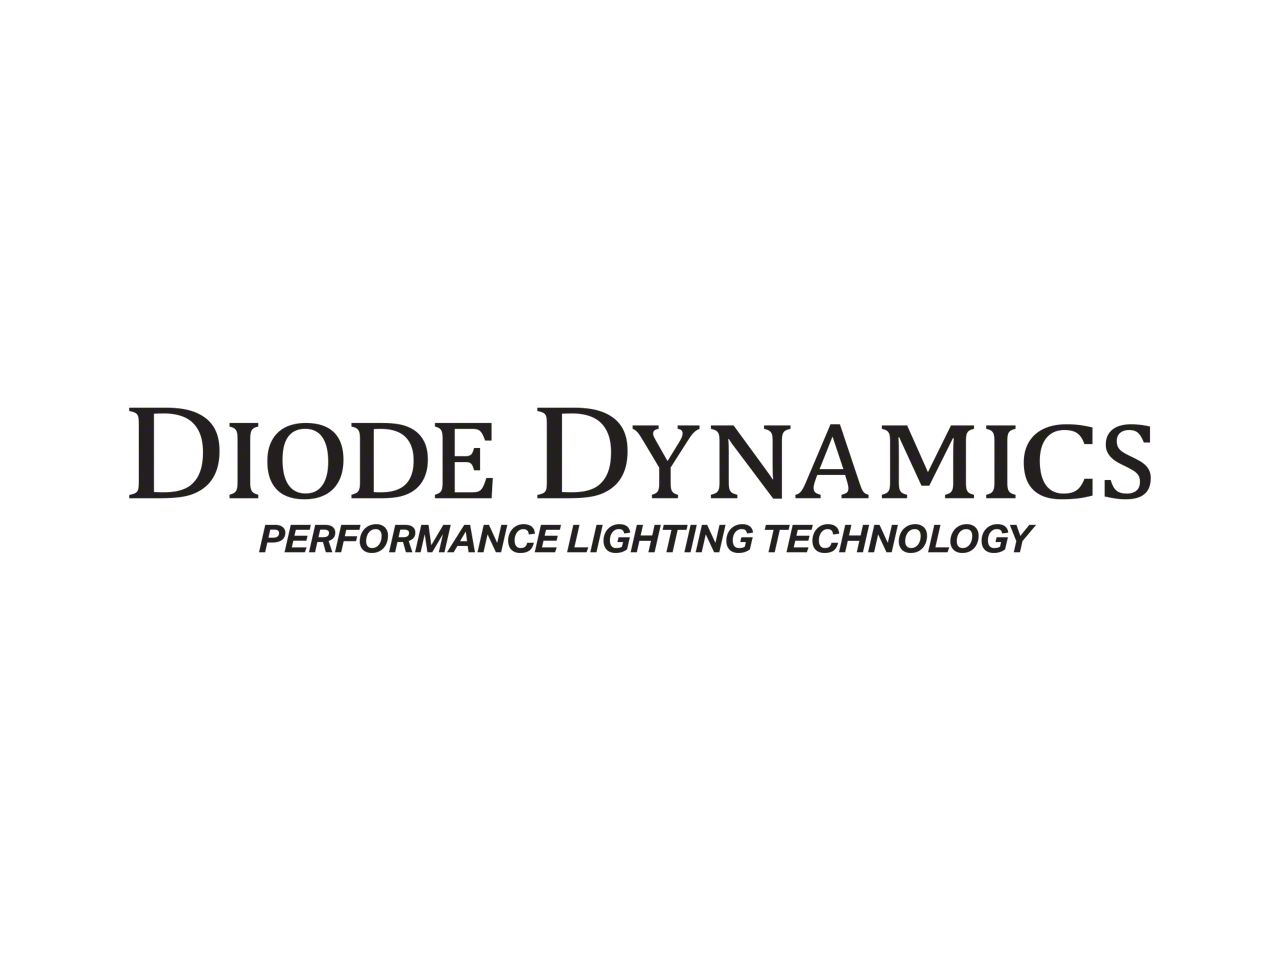 Diode Dynamics Parts